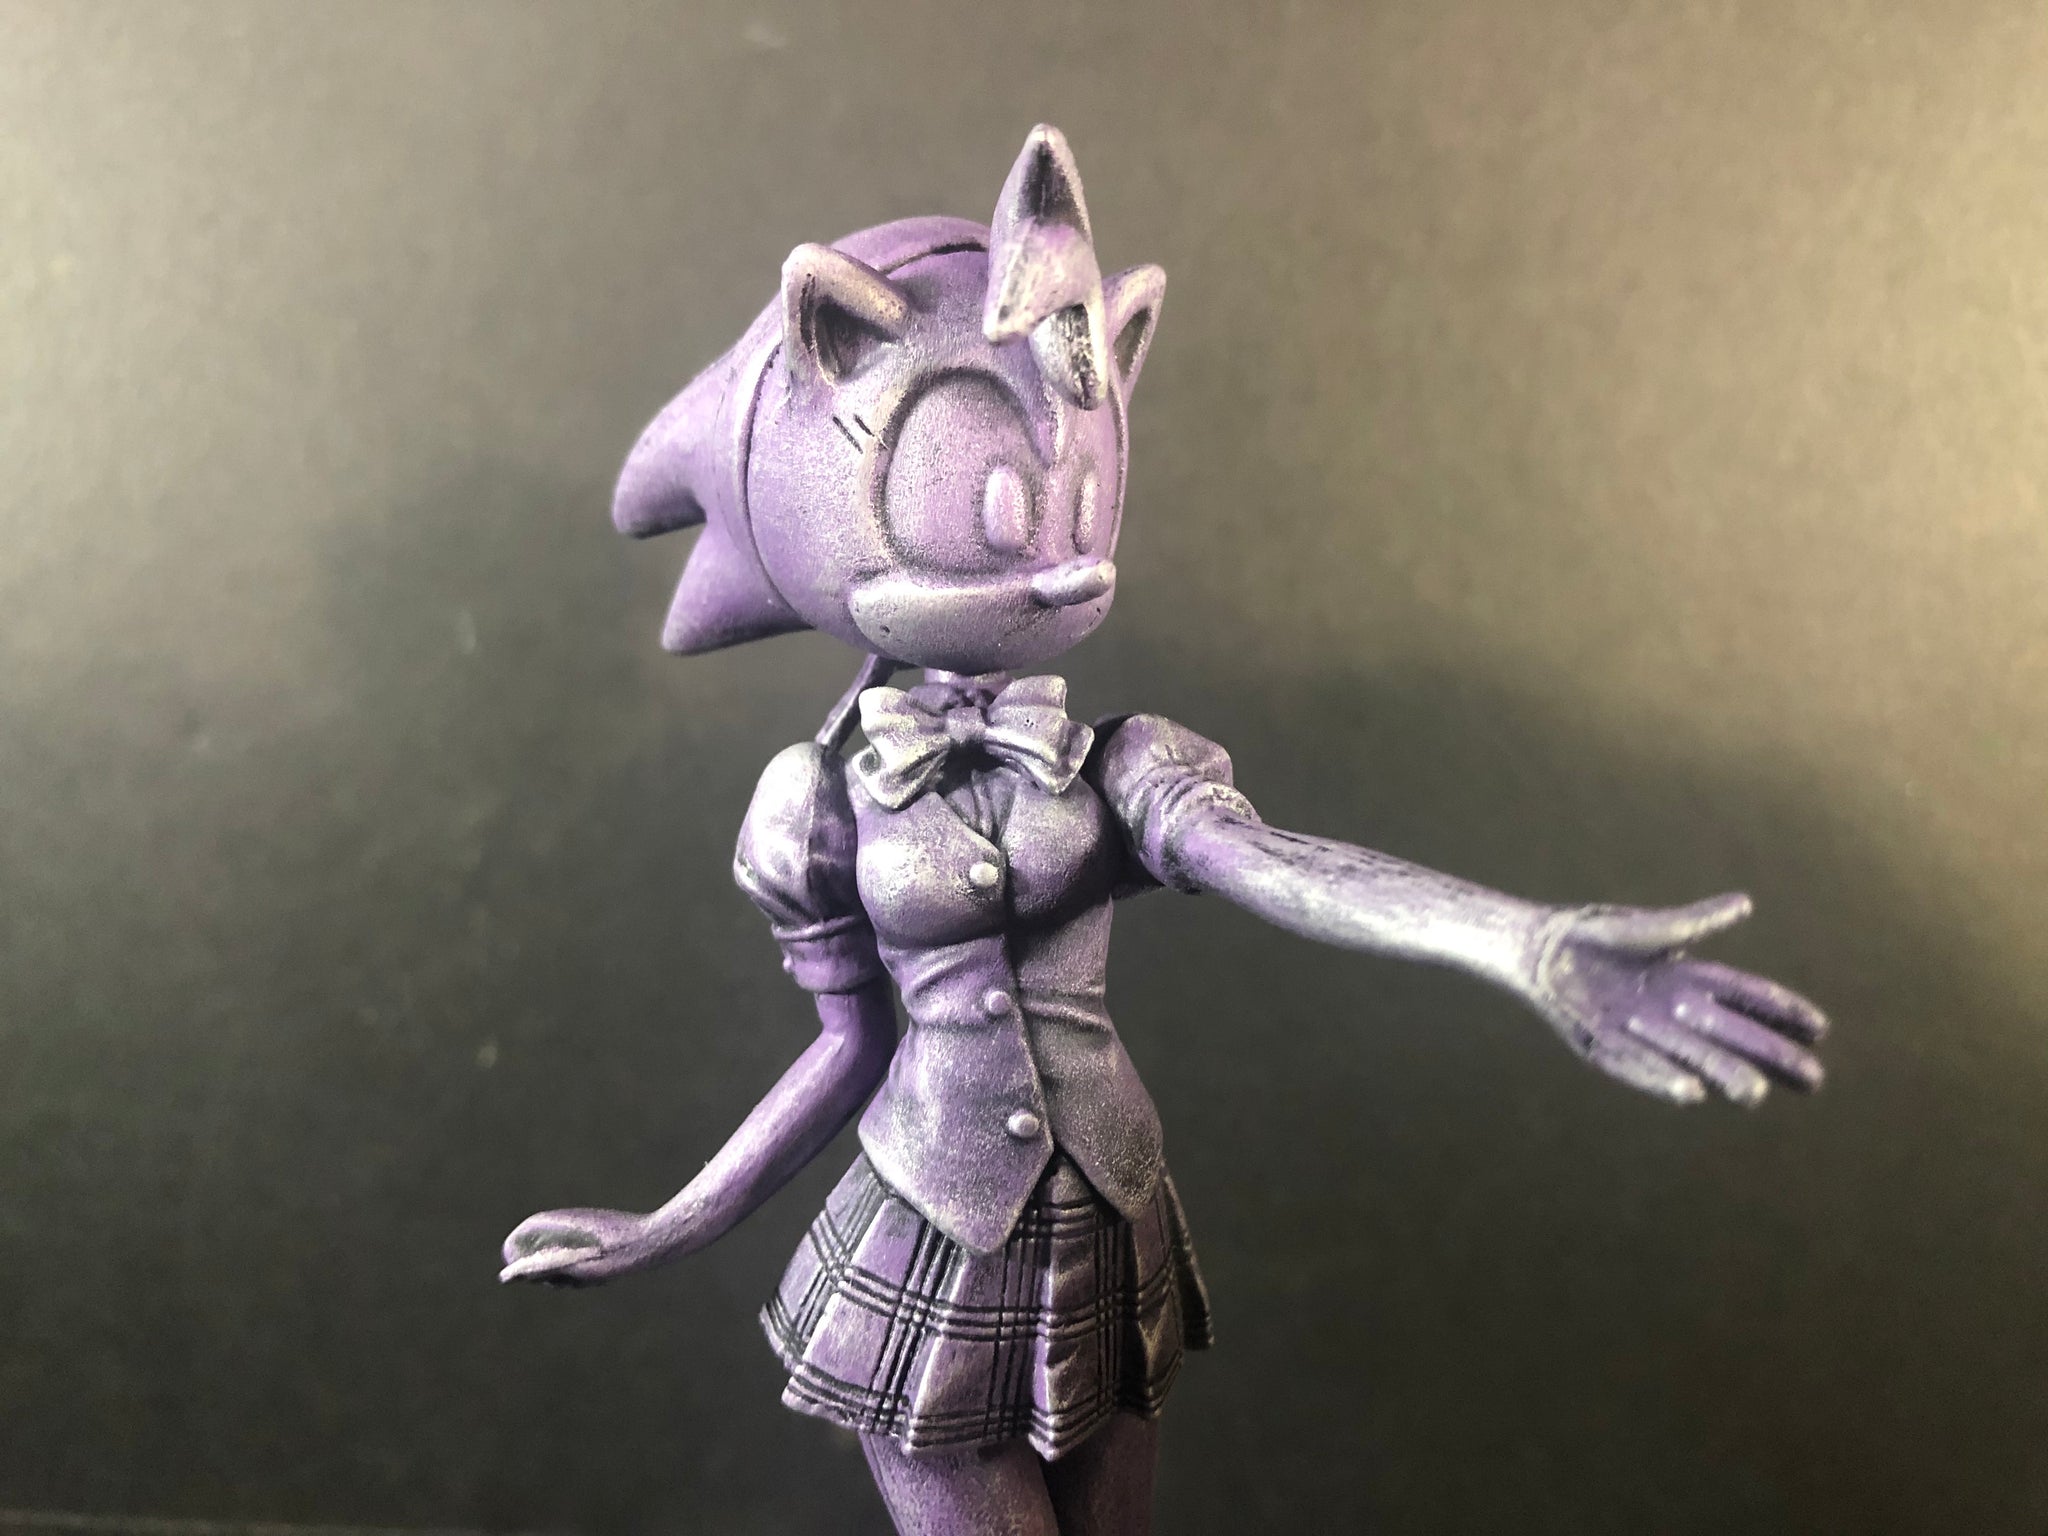 Custom / Edited - Sonic the Hedgehog Customs - Amy Rose - The